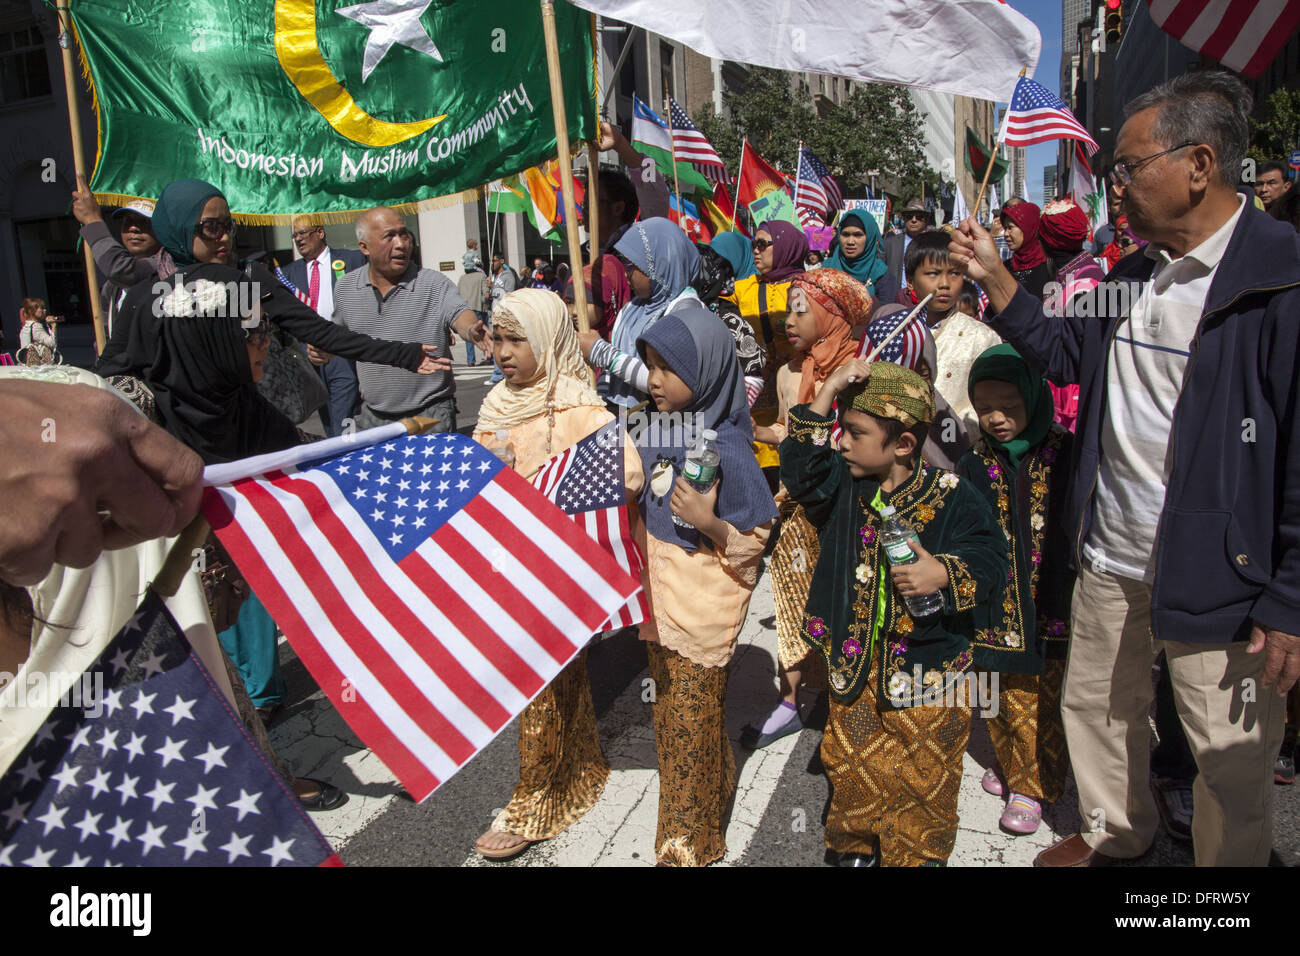 Annual Muslim Day Parade on Madison Avenue, New York City Stock Photo